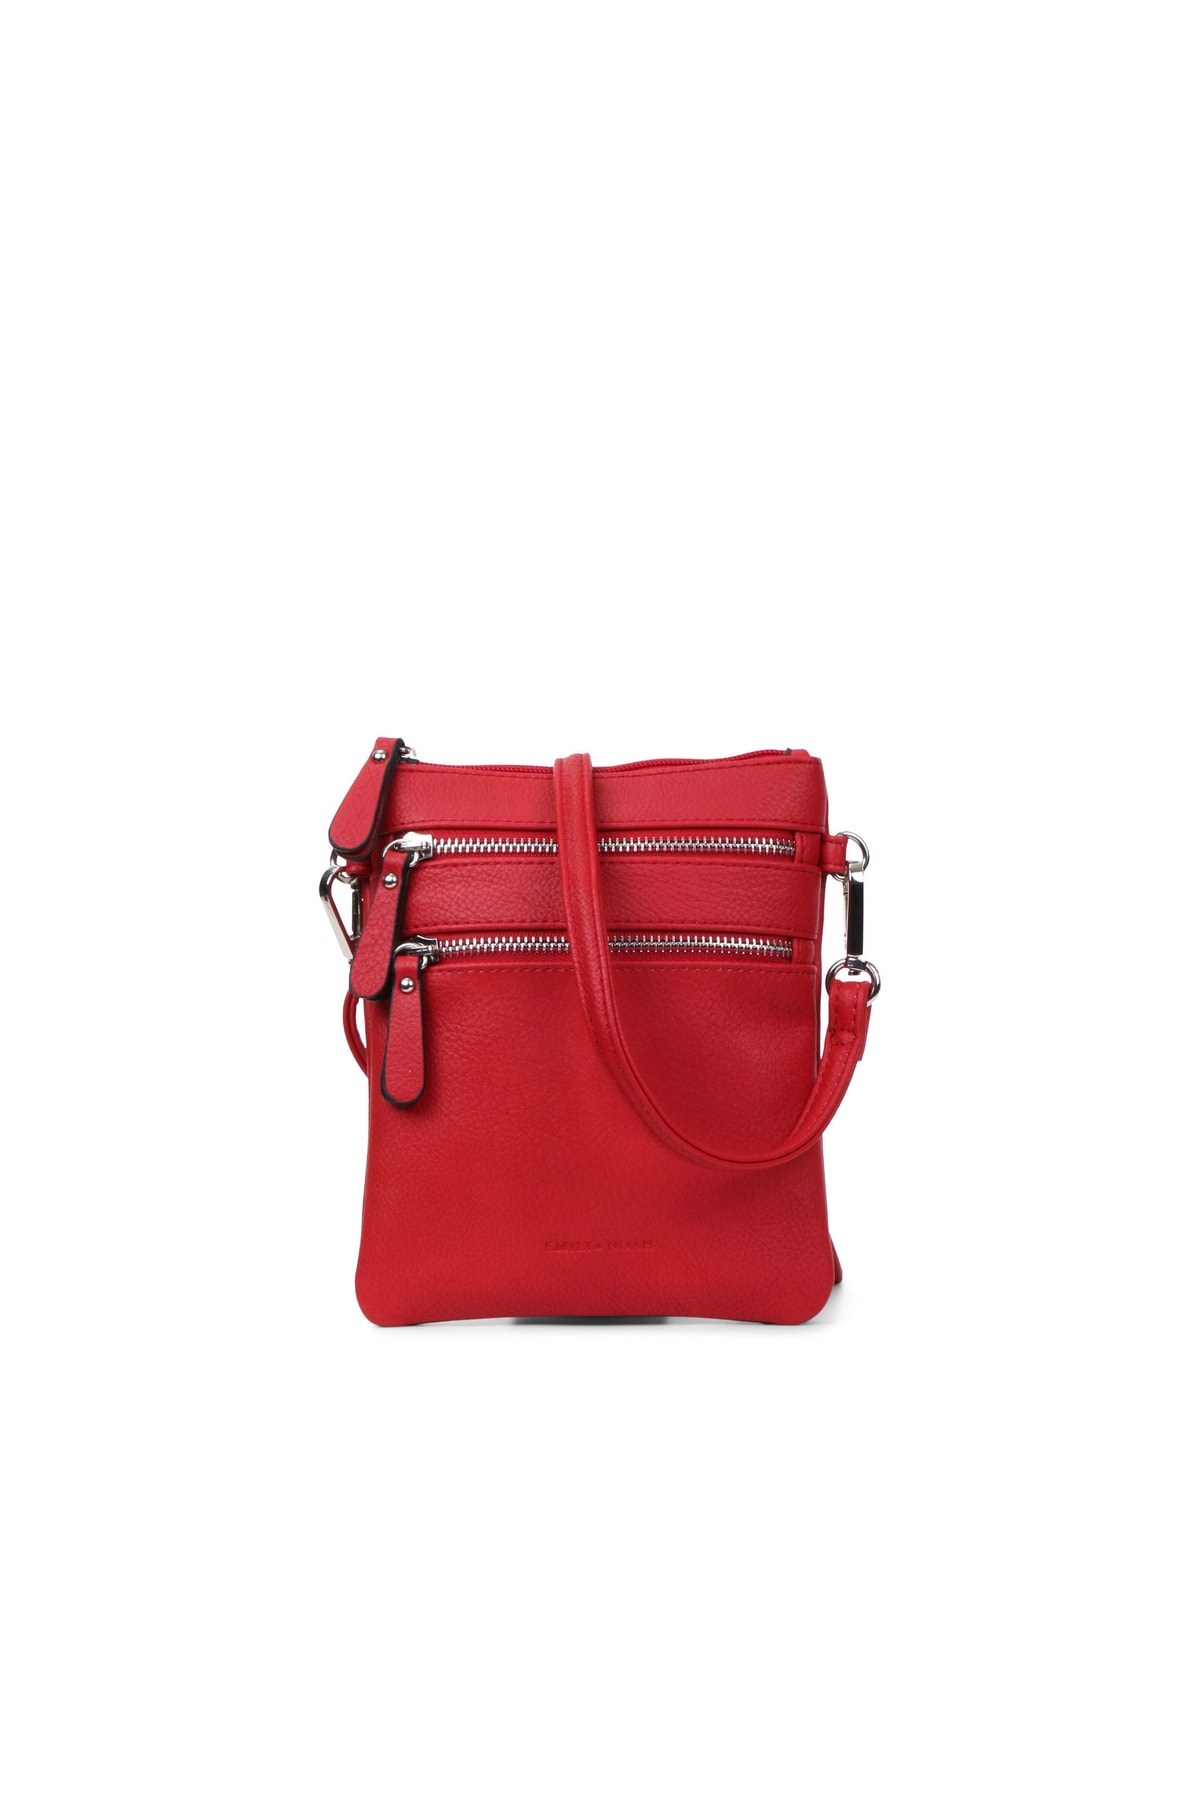 Calpierre Handtasche Rot Strukturiert